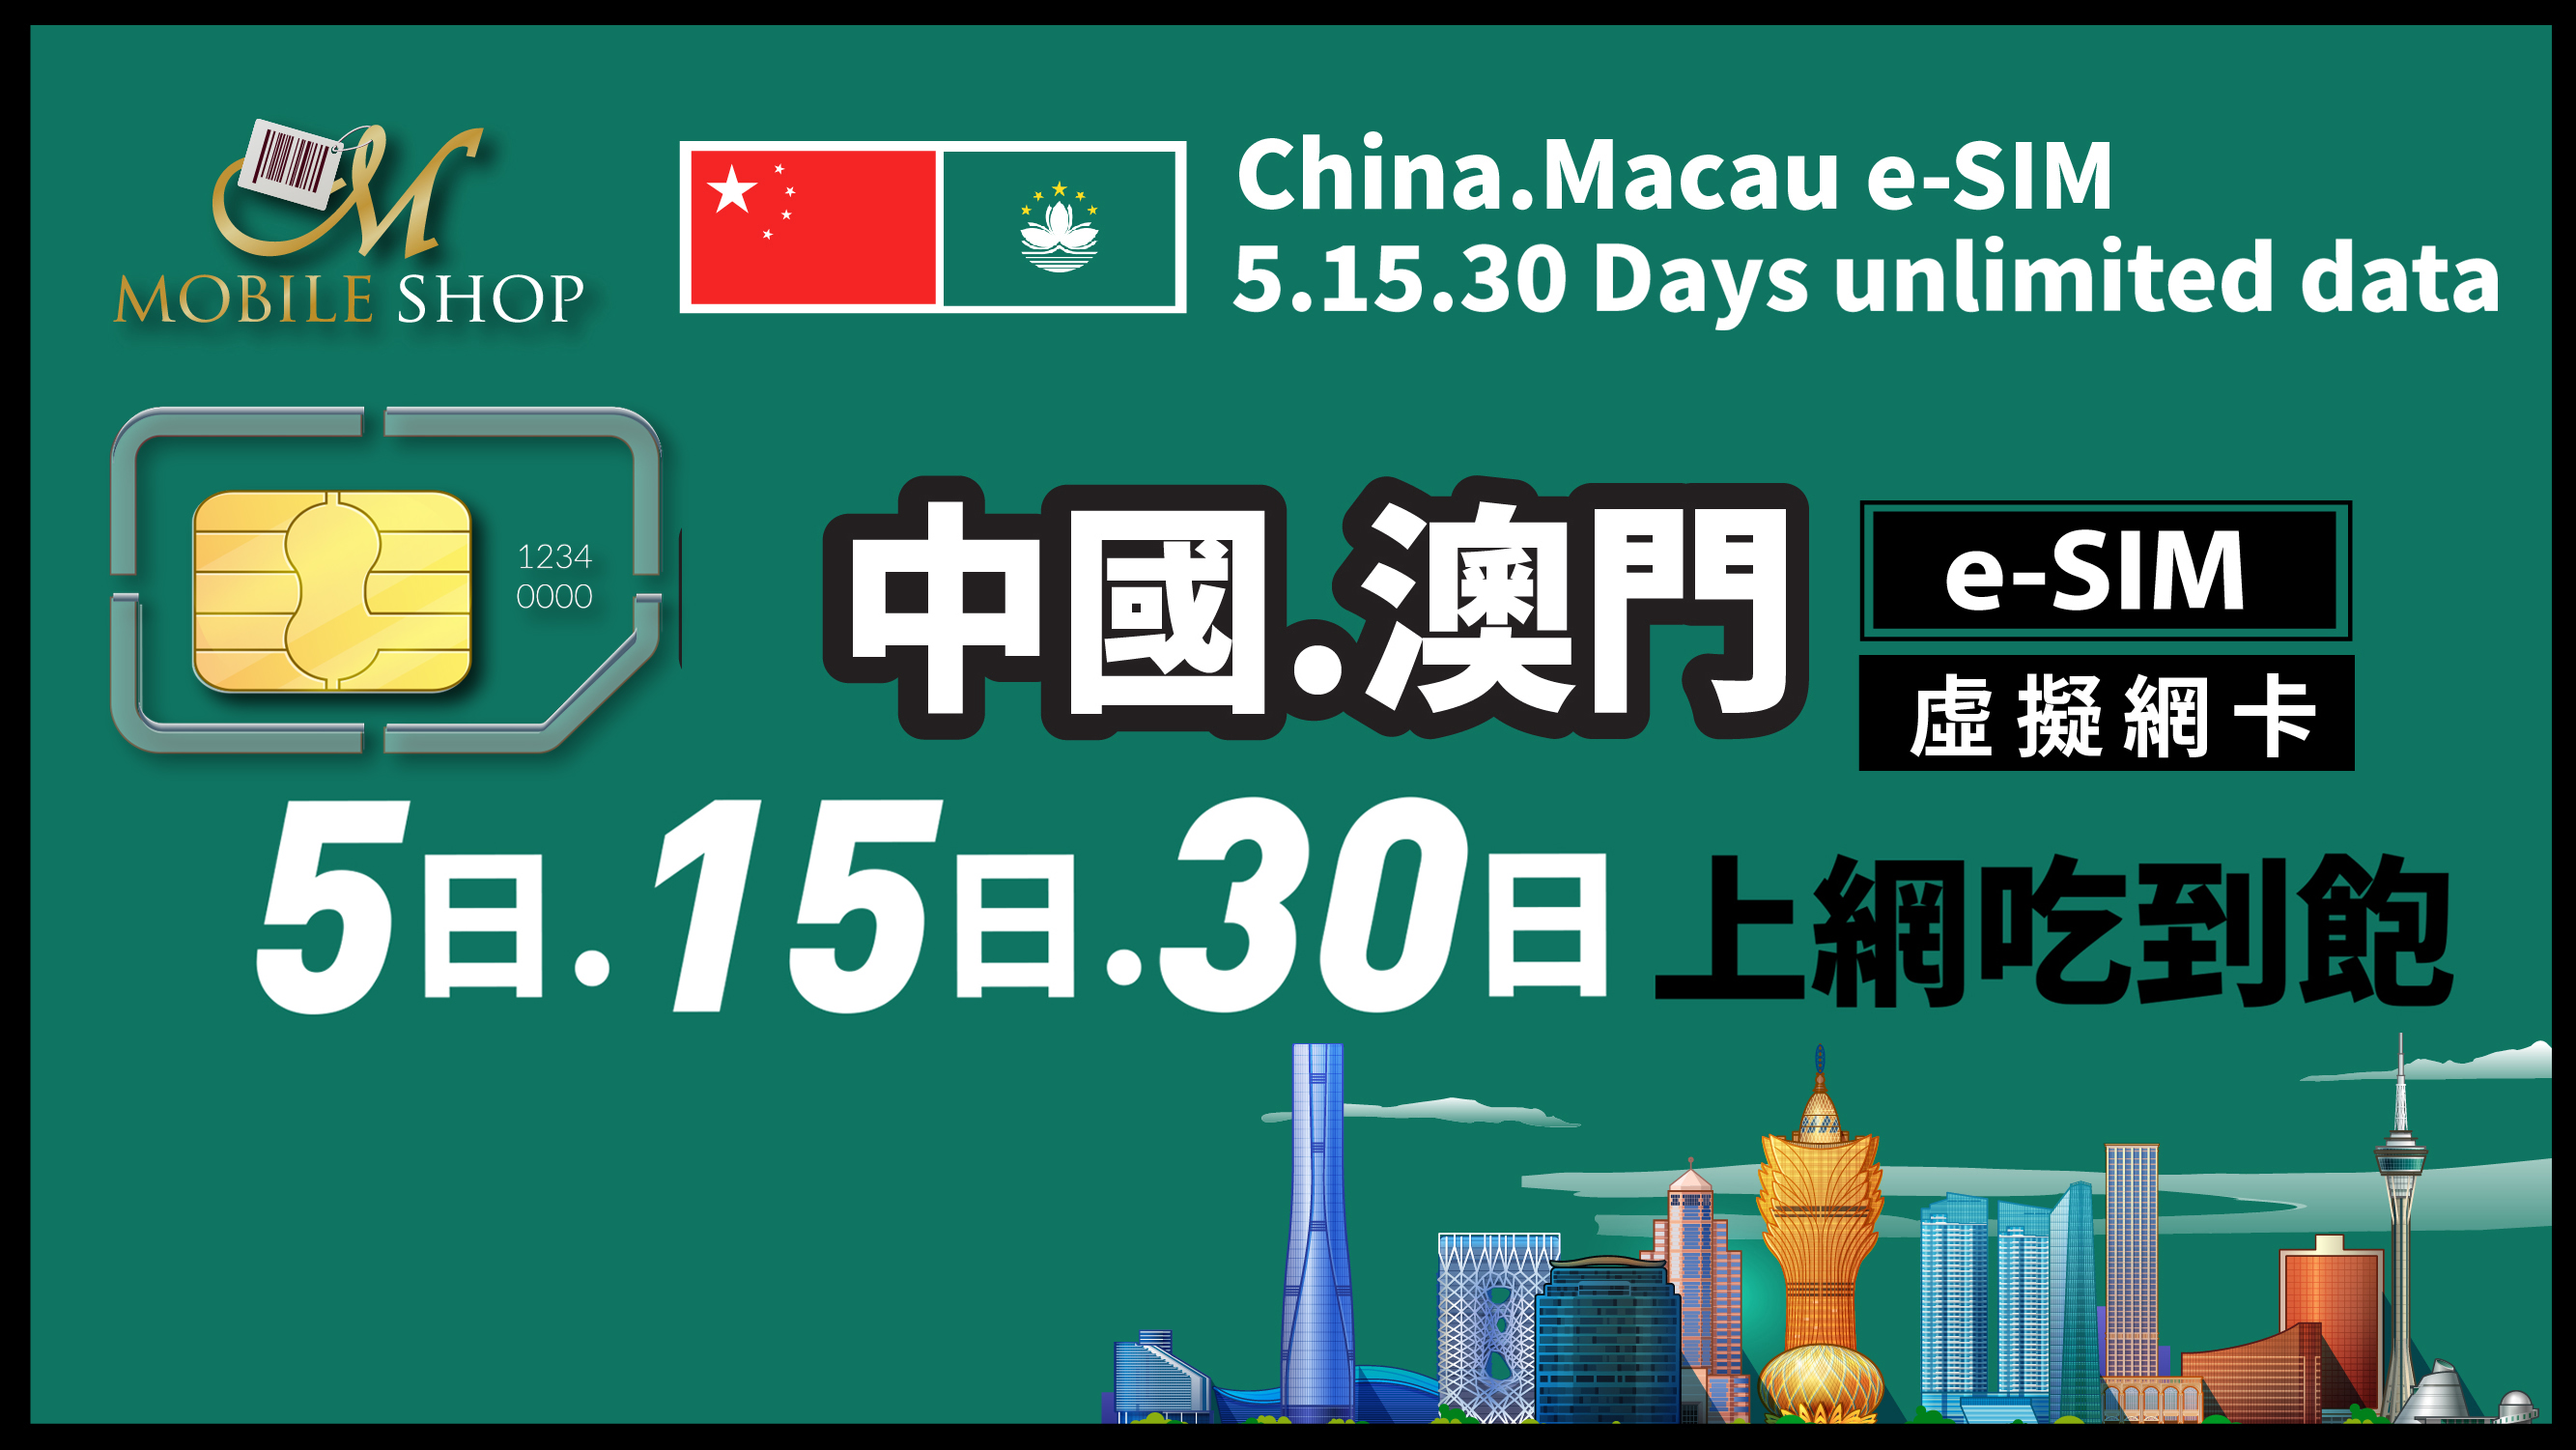 SIM_China Macau 5. 15. 30 days 